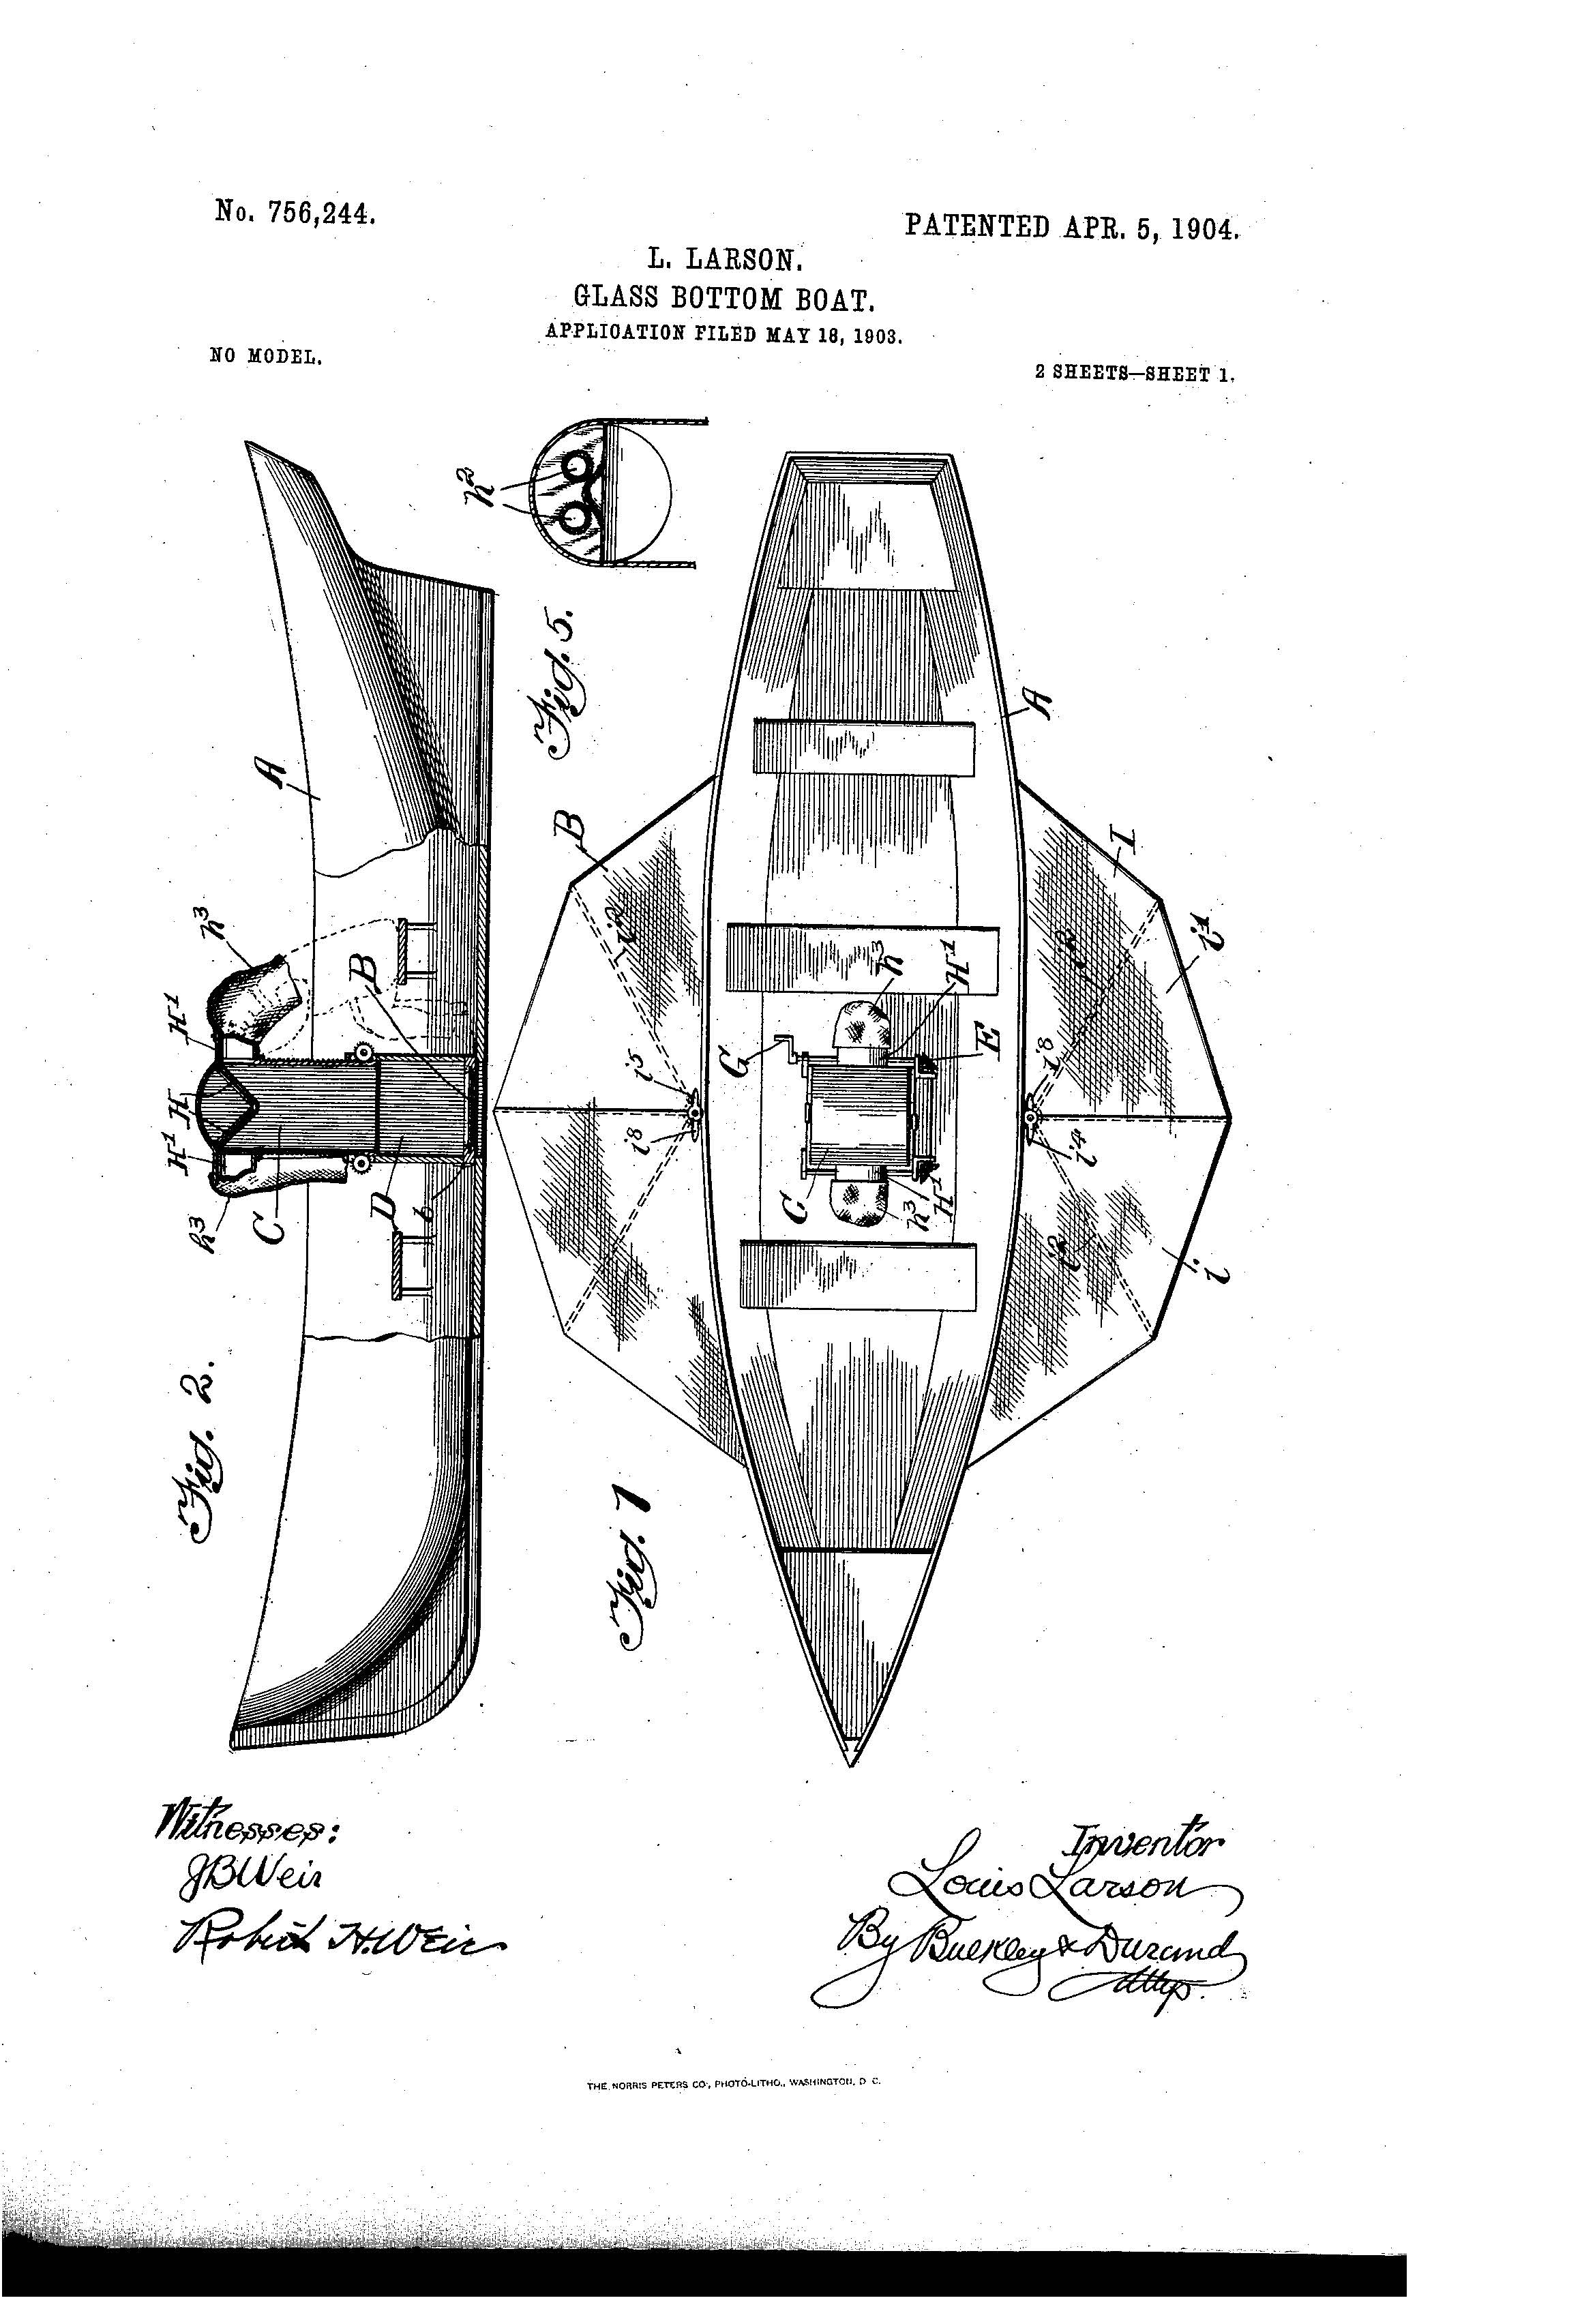 Glass Bottom Boat Patent